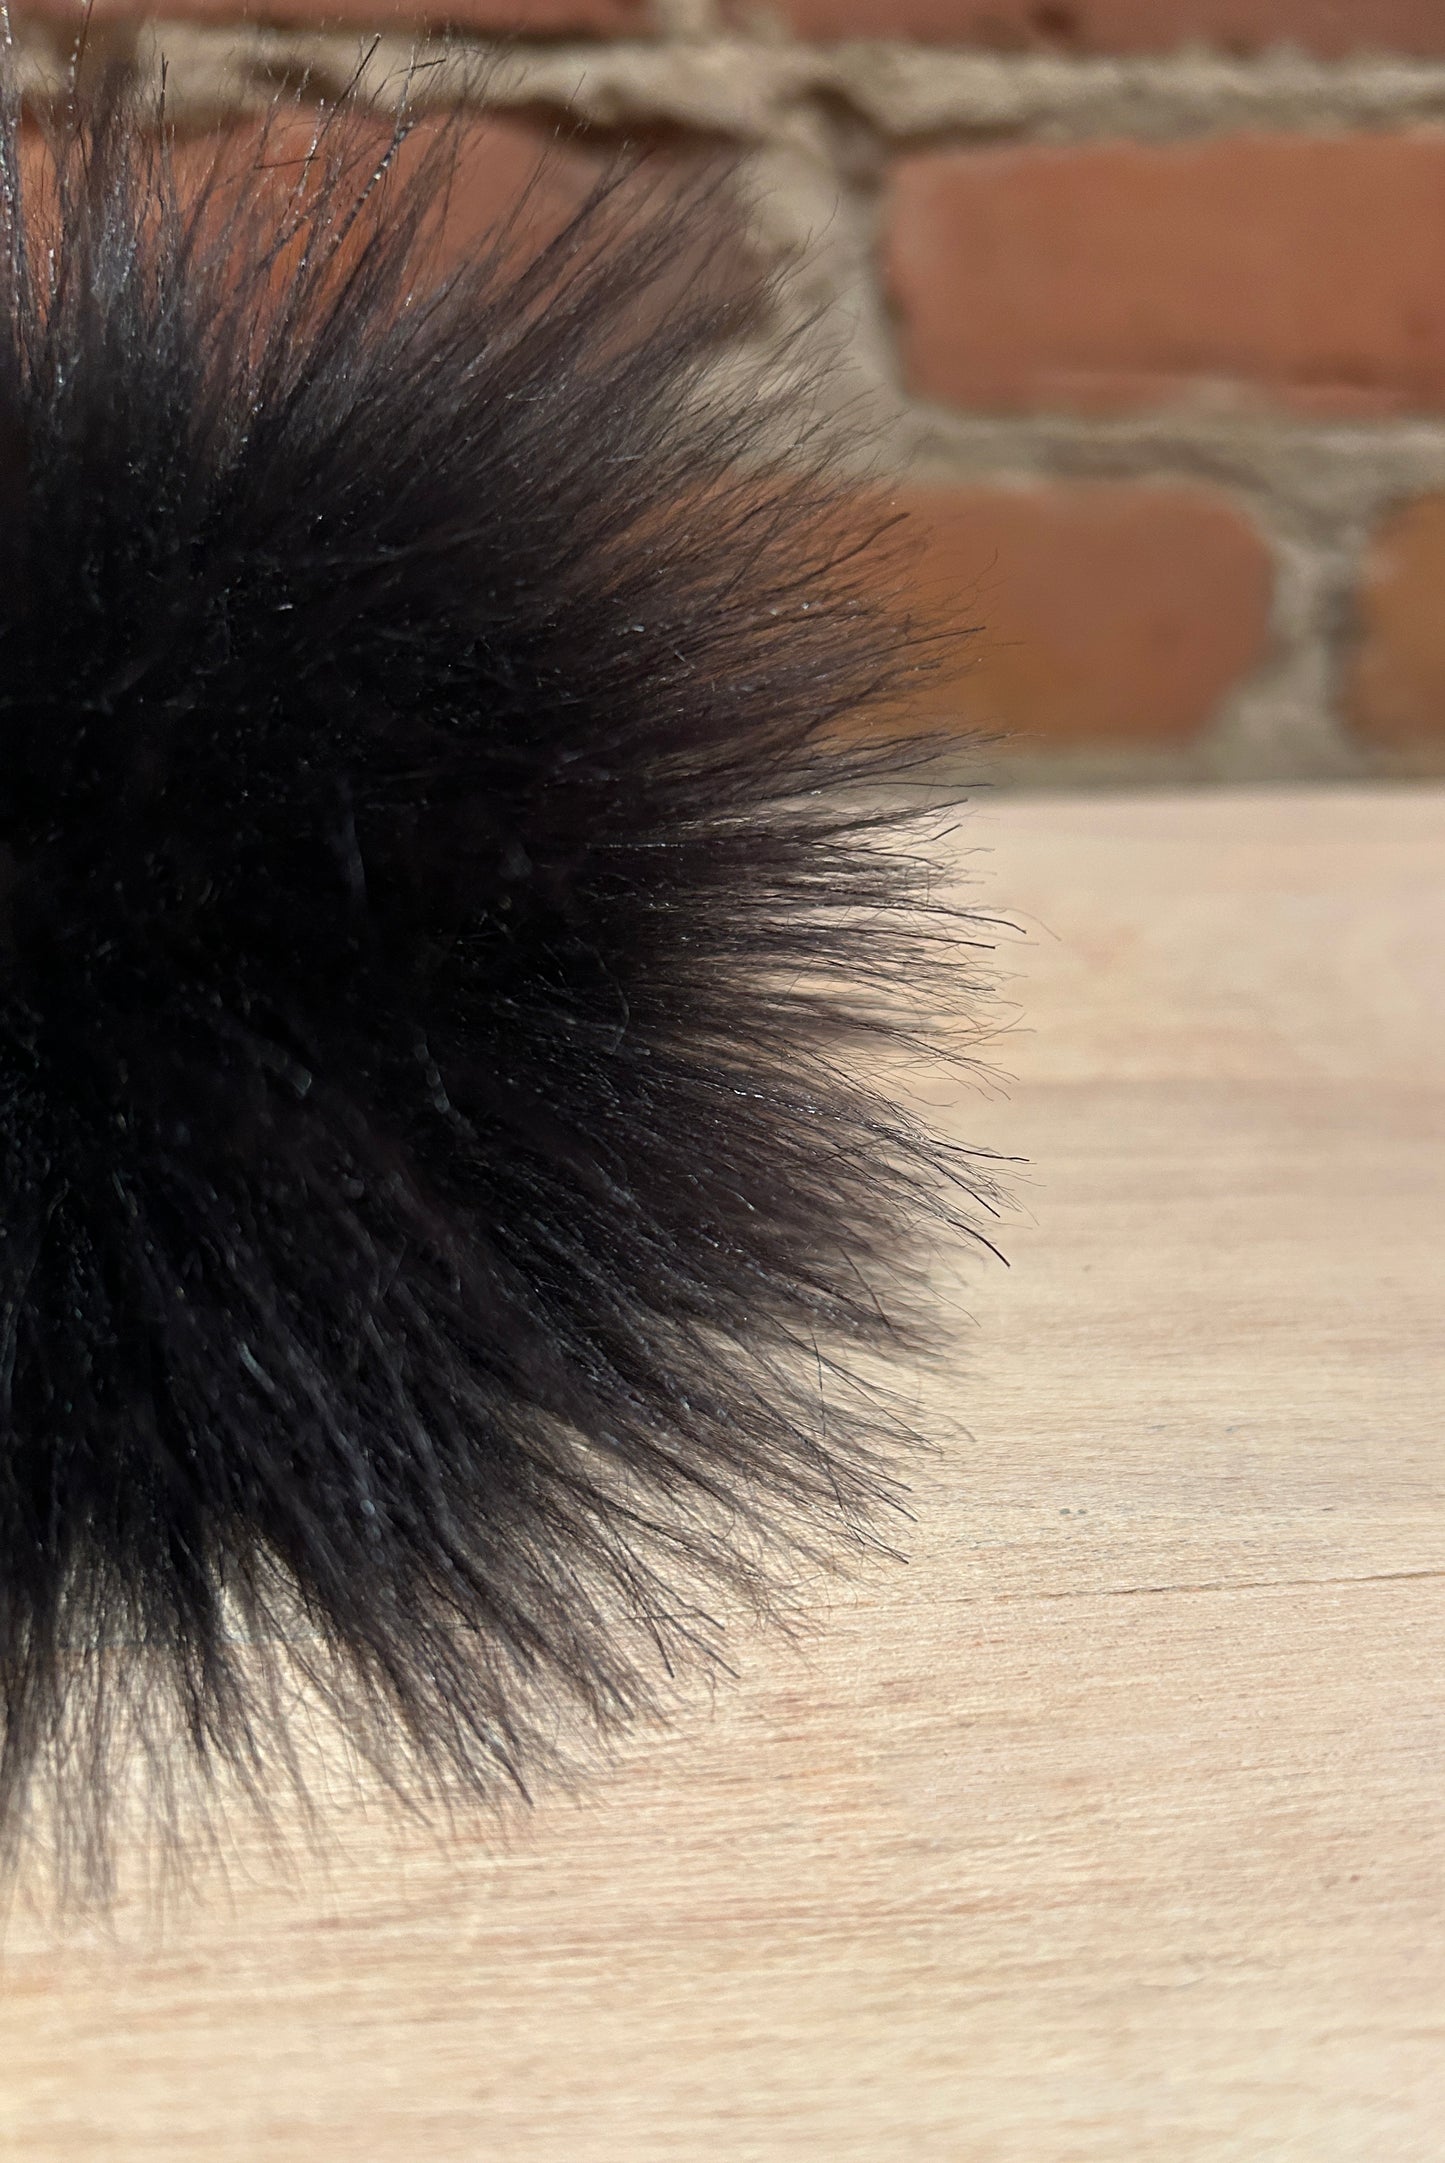 Charcoal Black Faux Fur Pom, 3.5 Inch